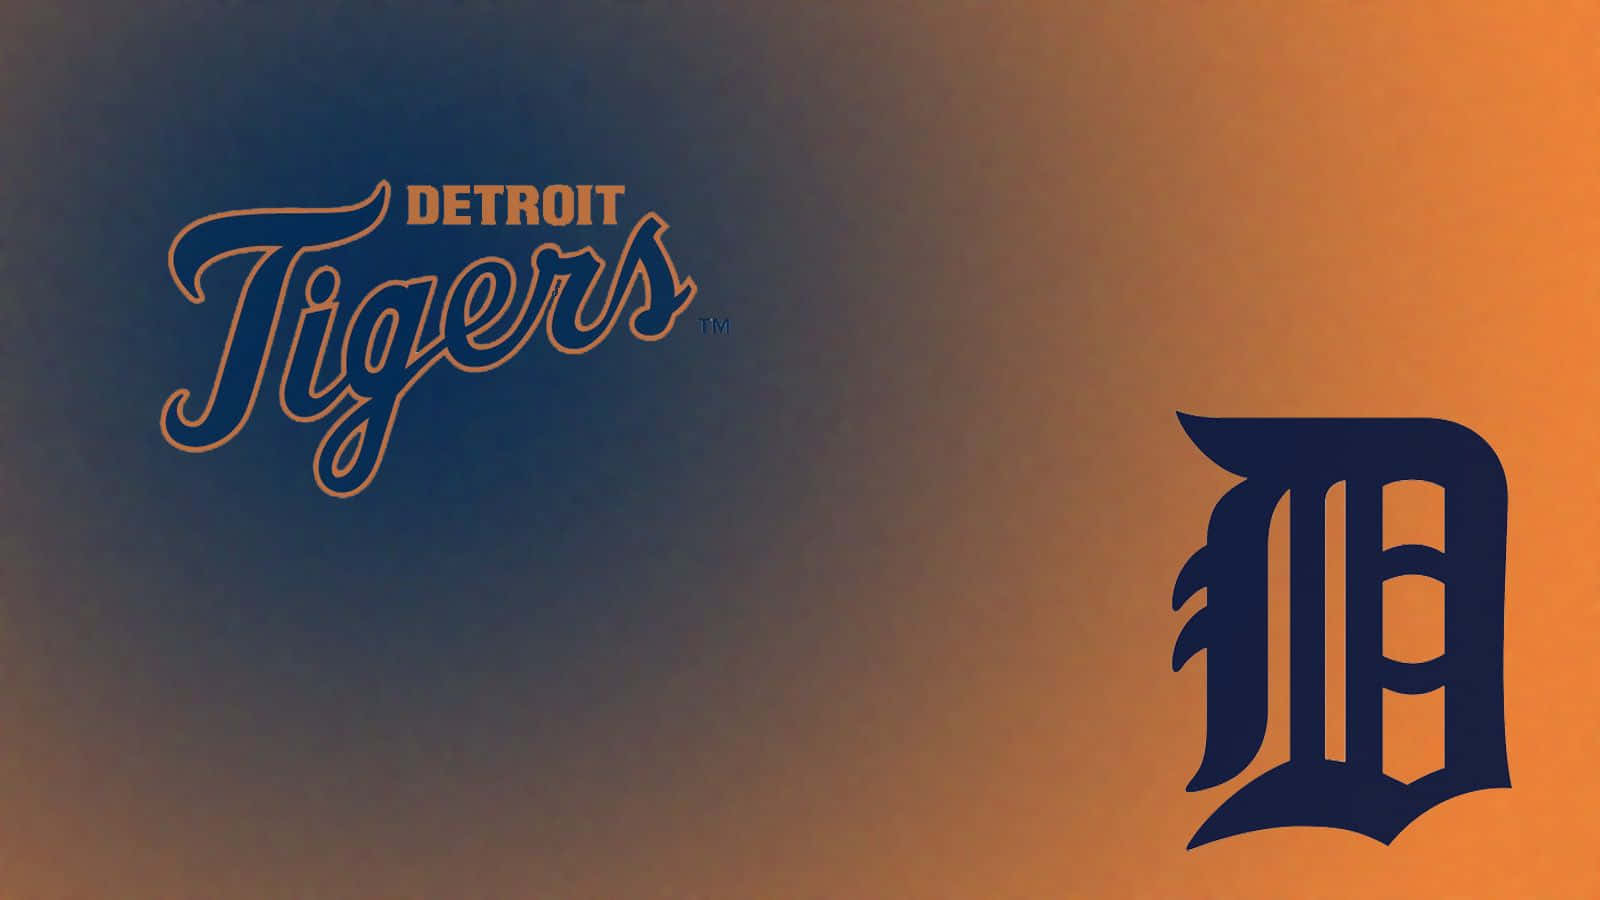 Logodei Detroit Tigers. Sfondo